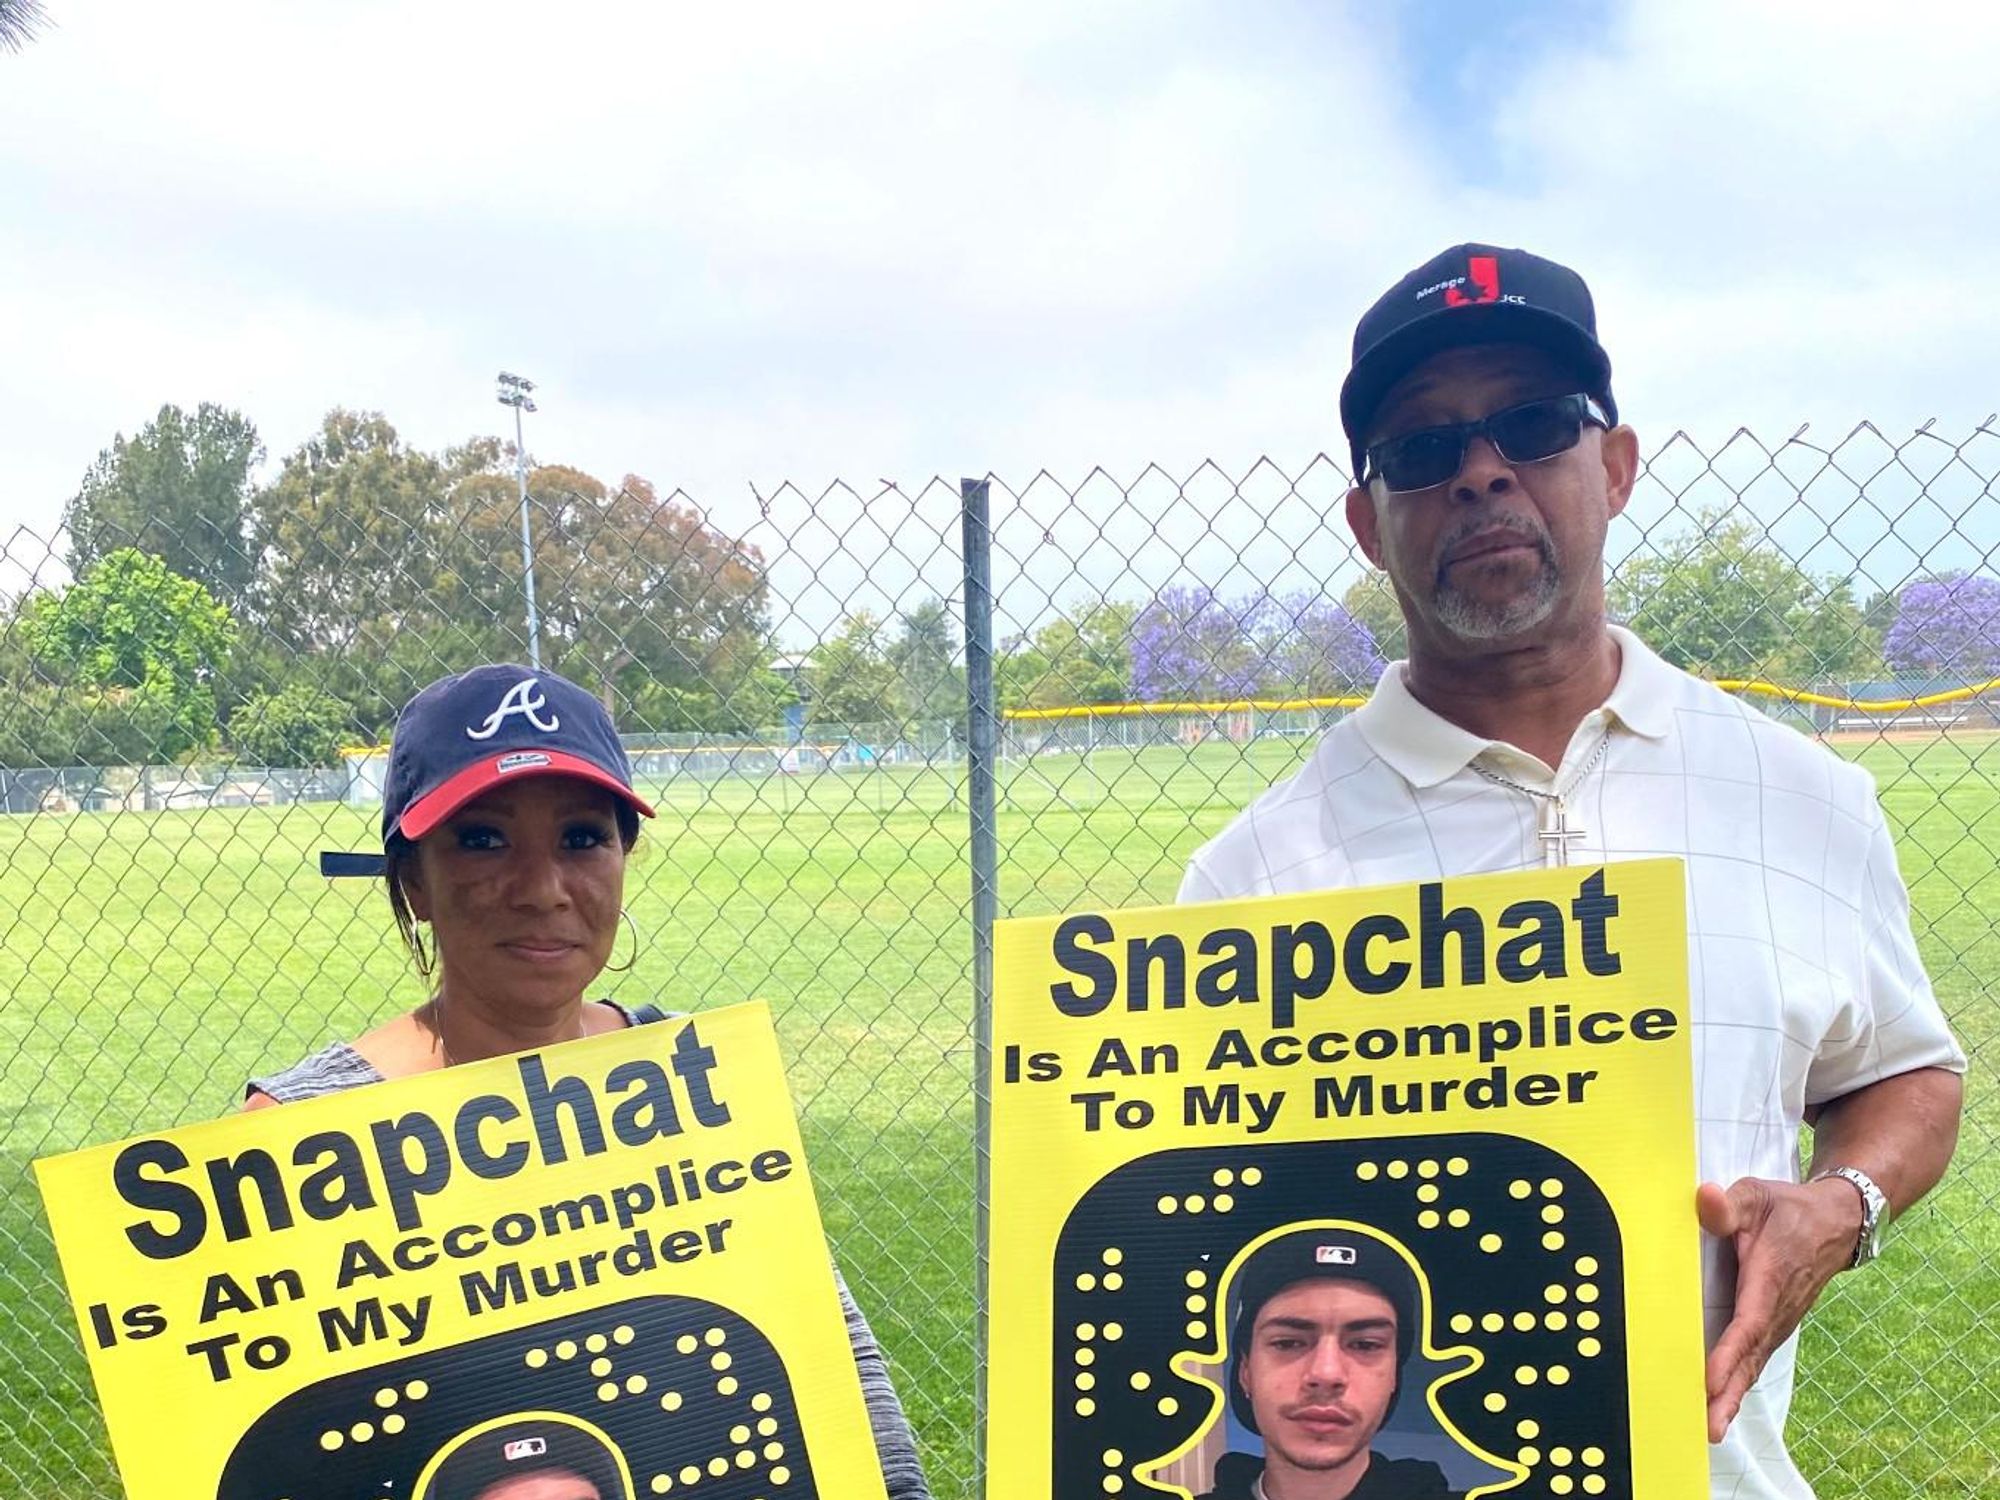 Snapchat protest